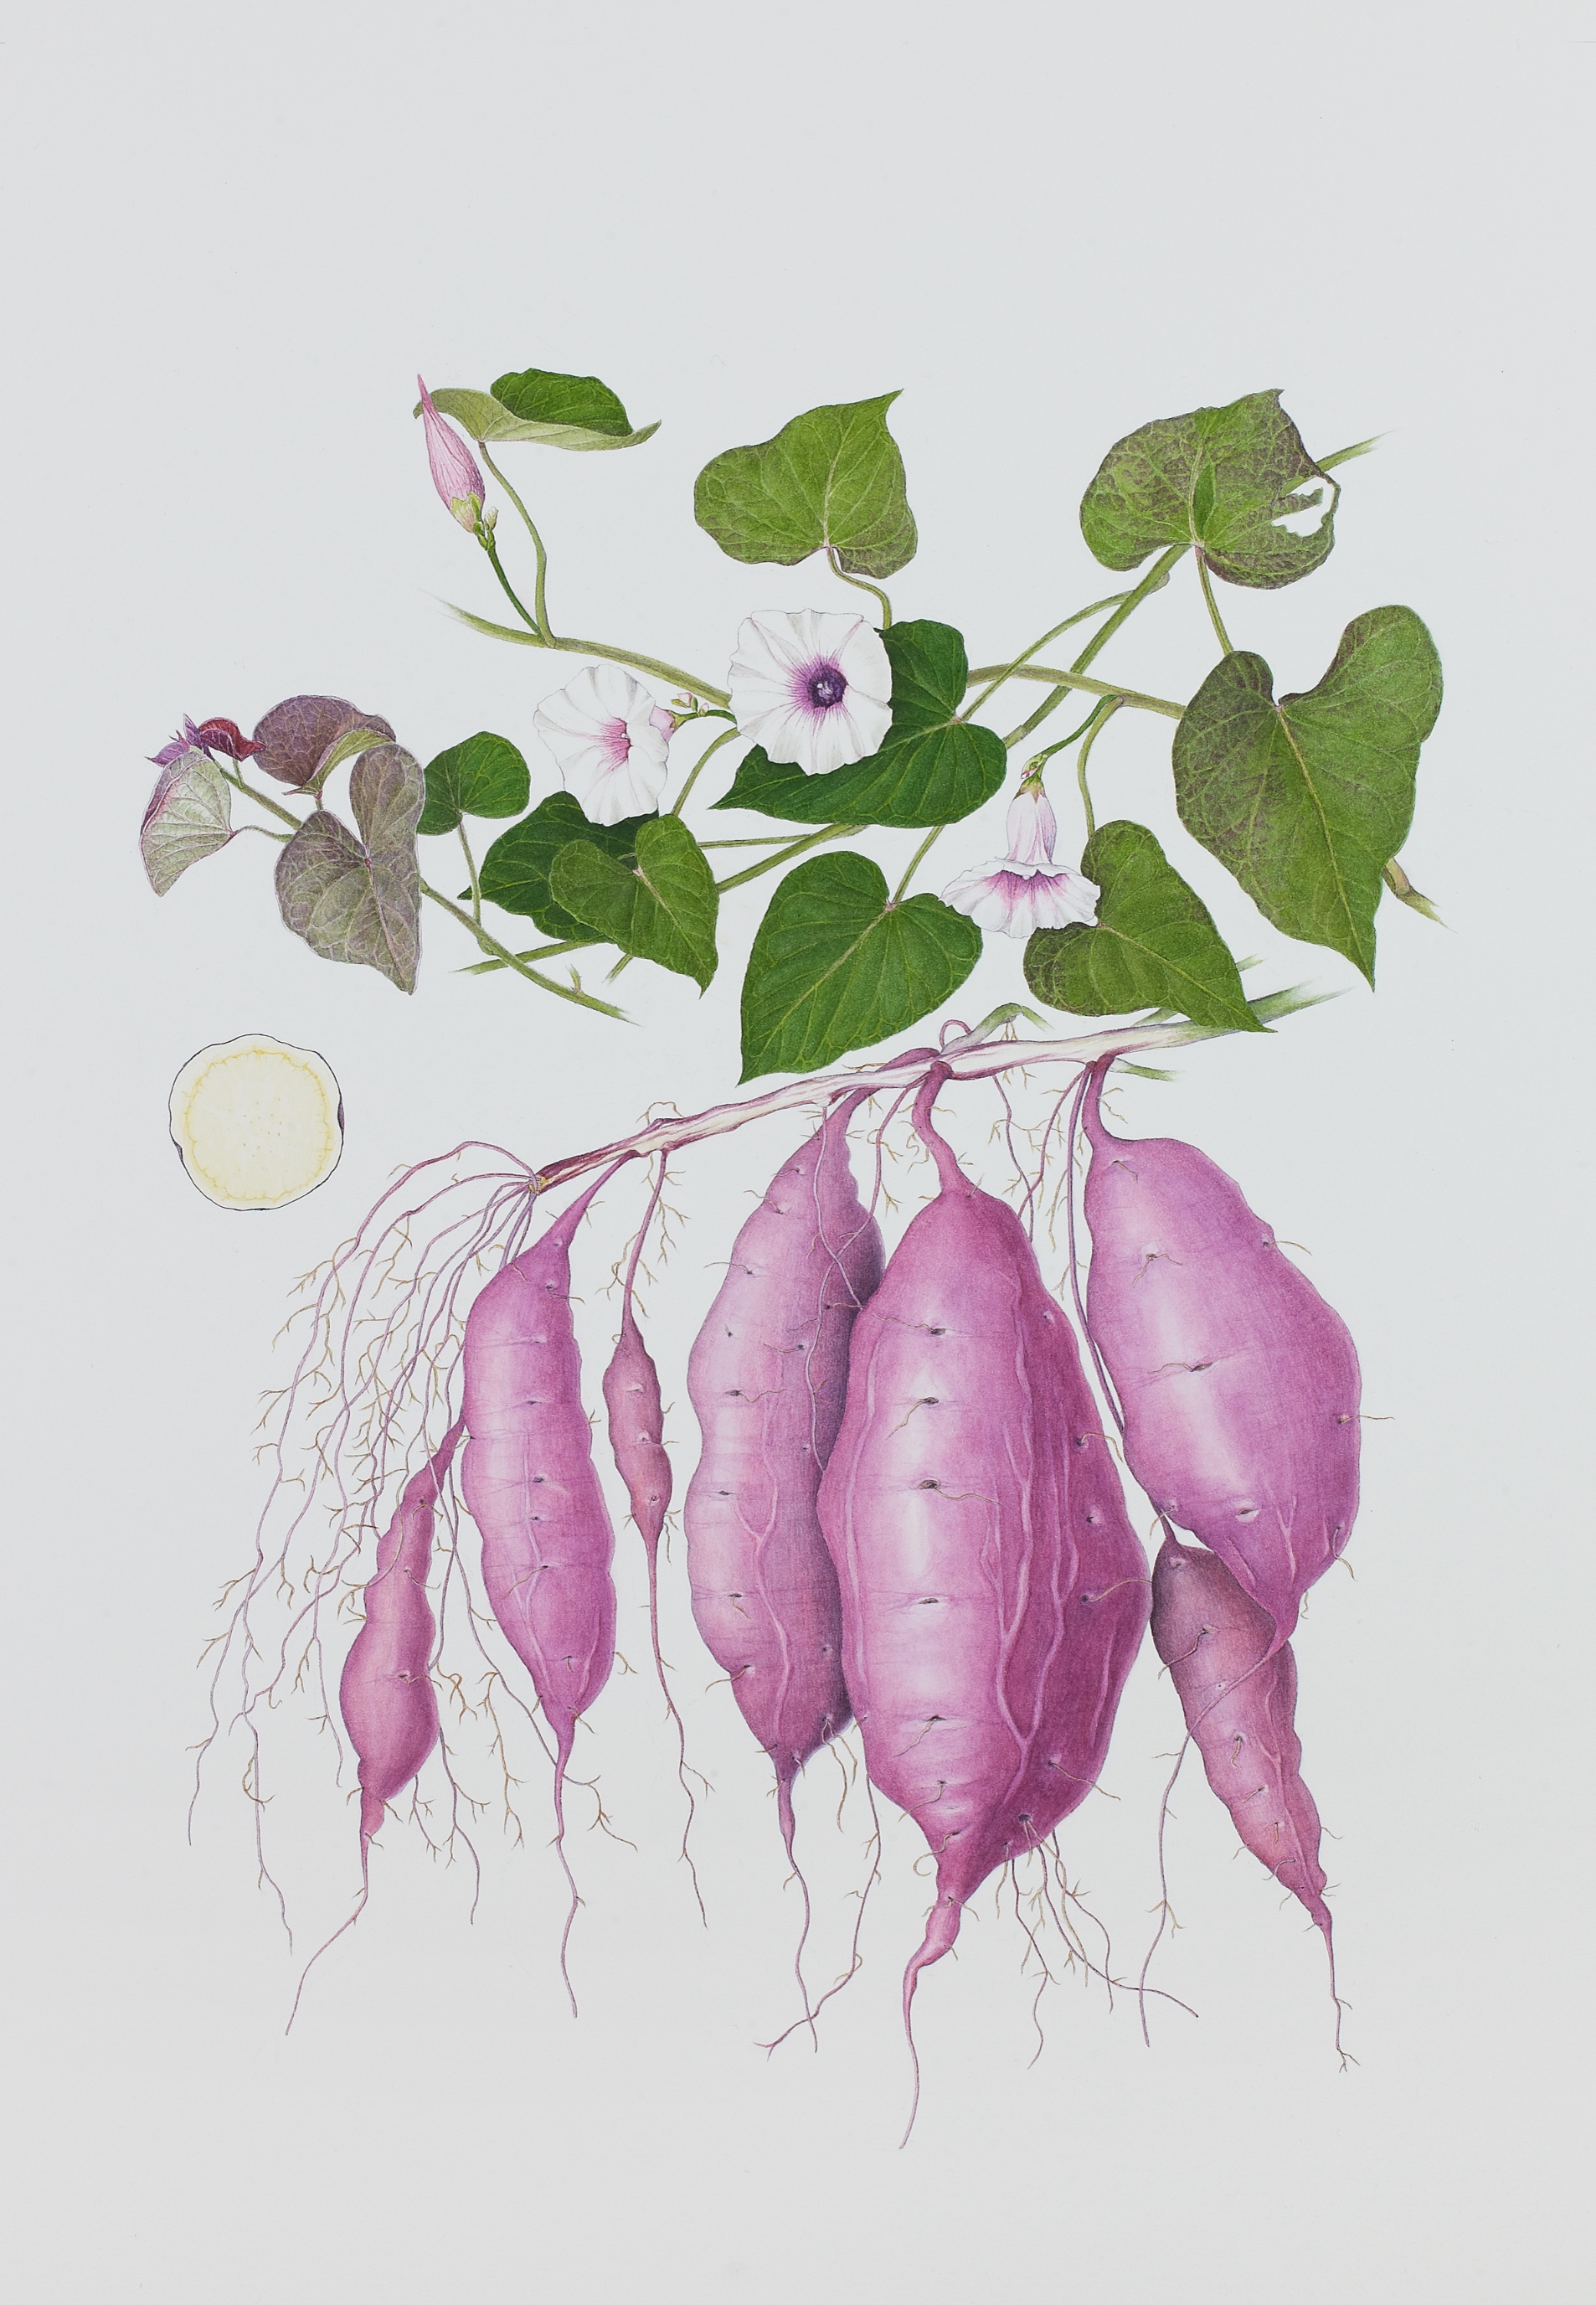 Illustration of sweet potato plant, with light purple tubers beneath vine